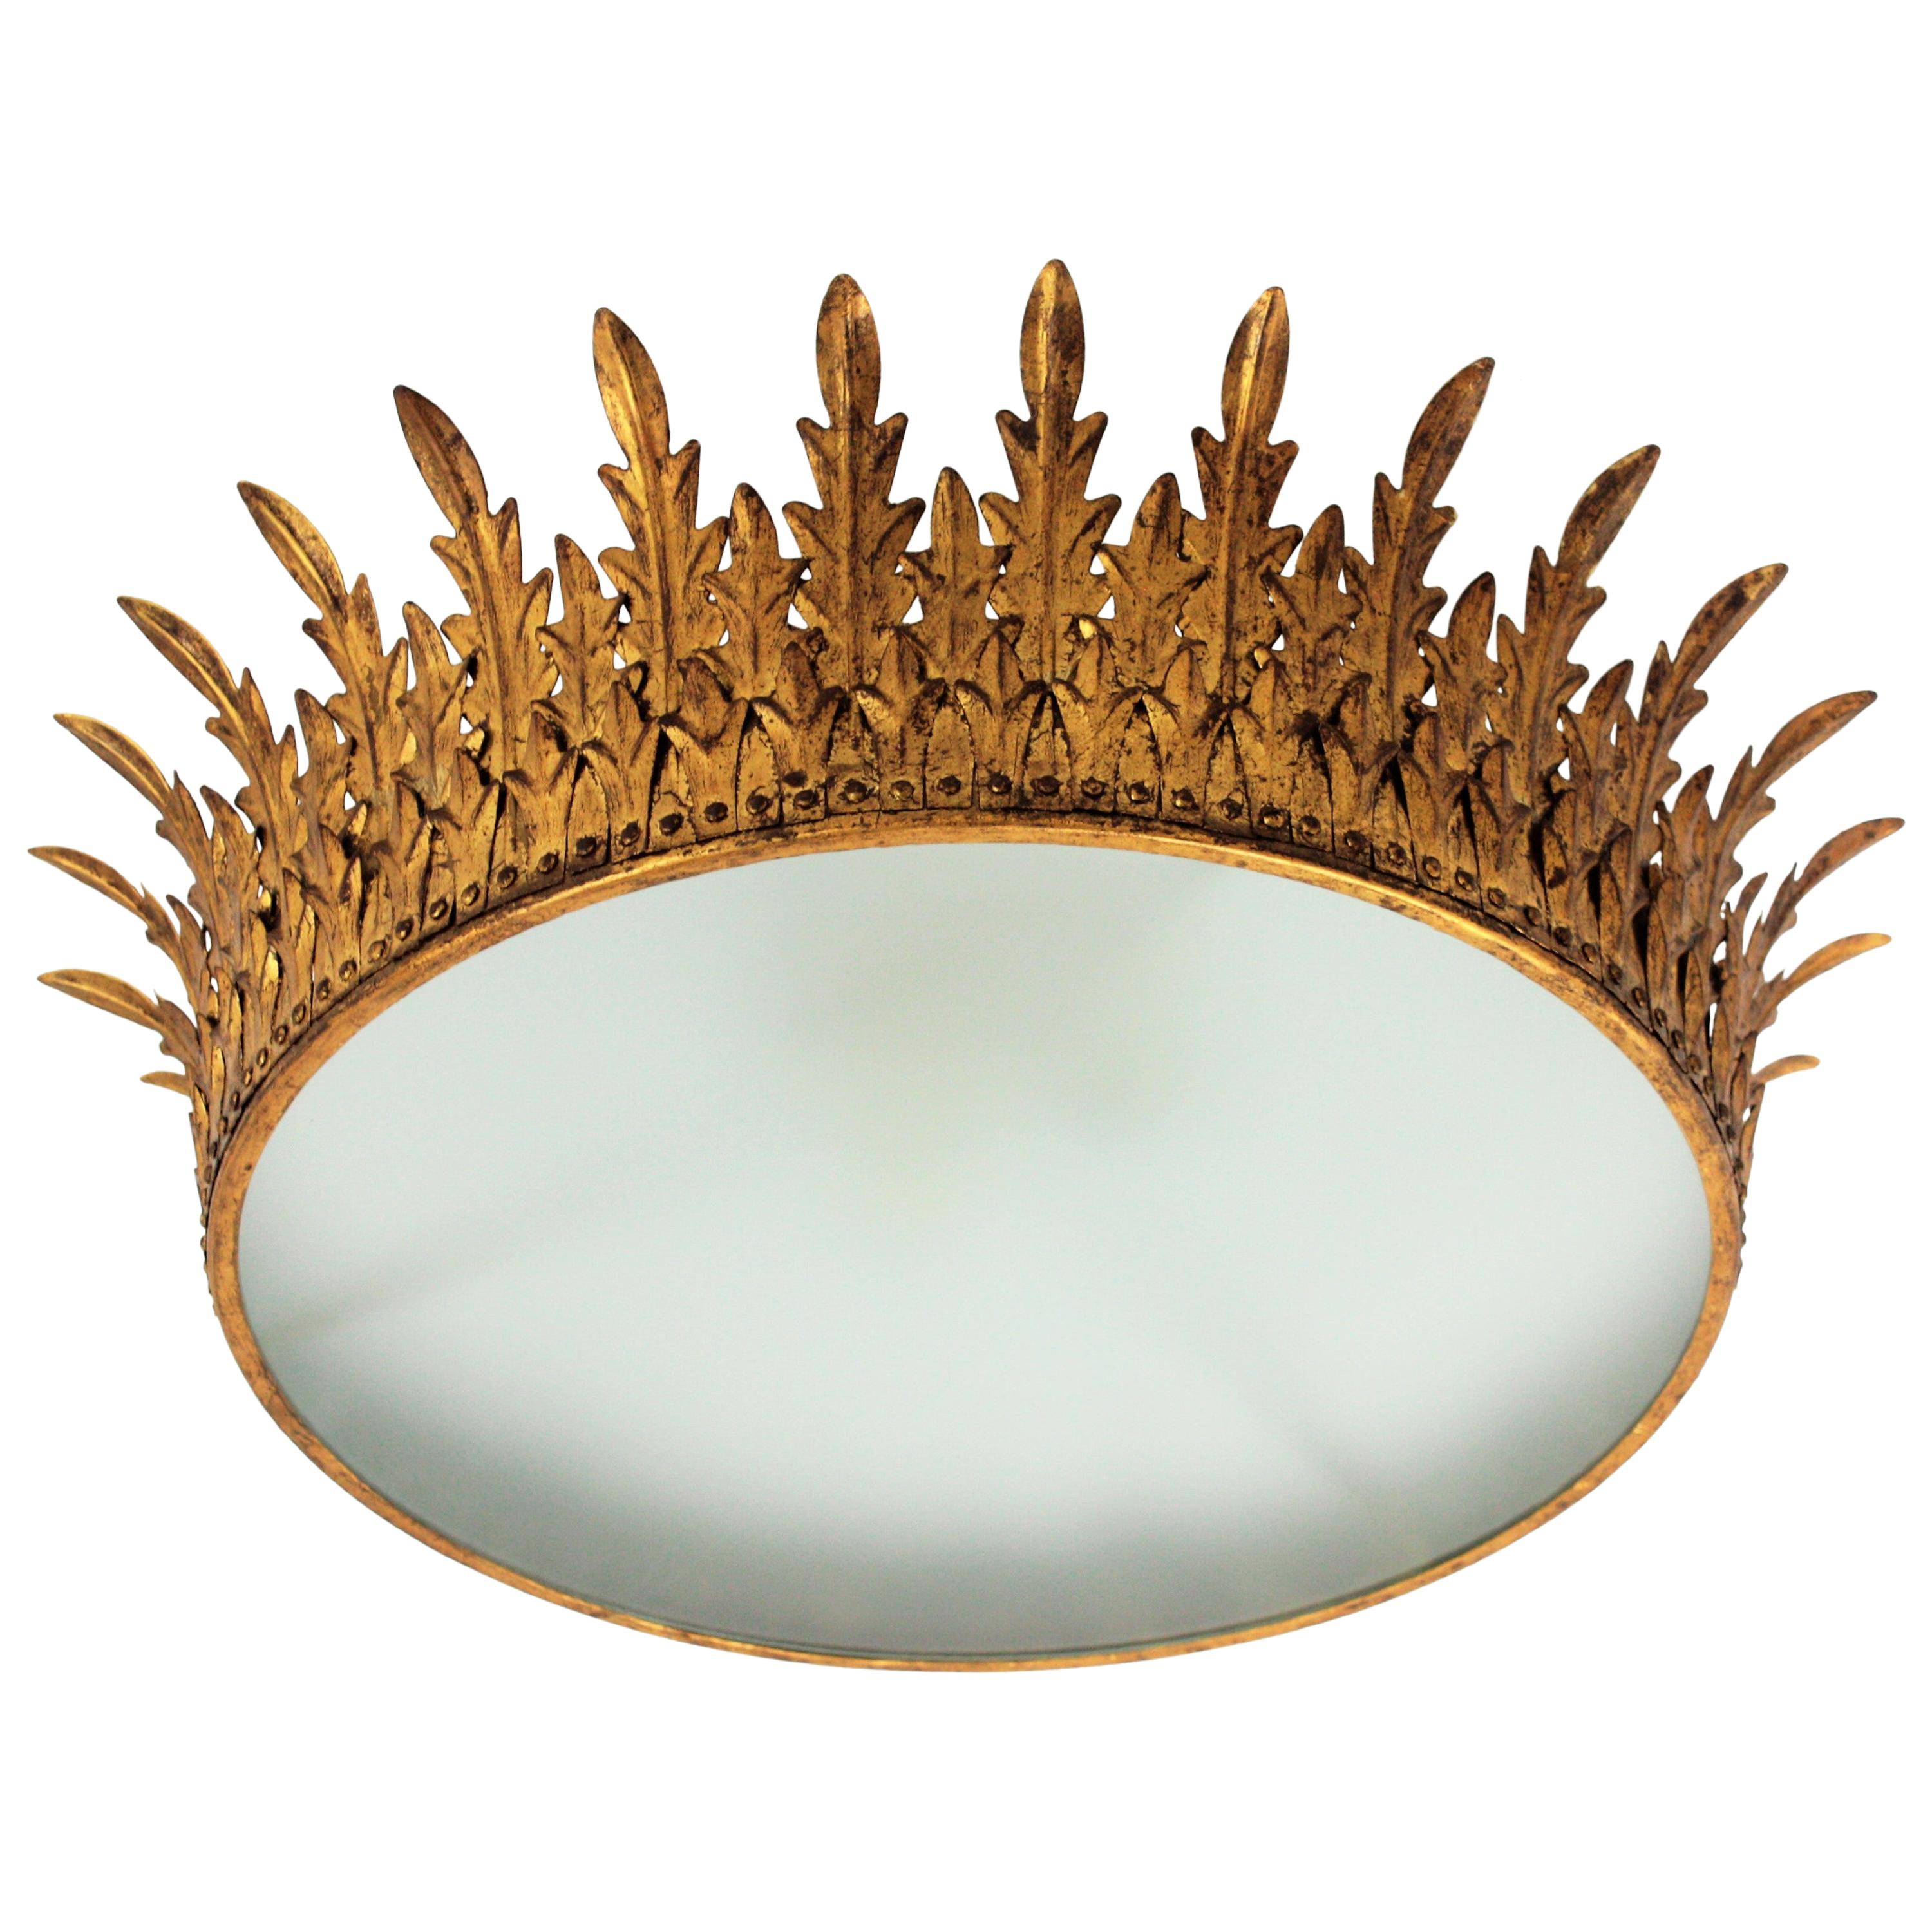 Spanish Extra Large Neoclassical Gilt Iron Sunburst Crown Ceiling Light Fixture